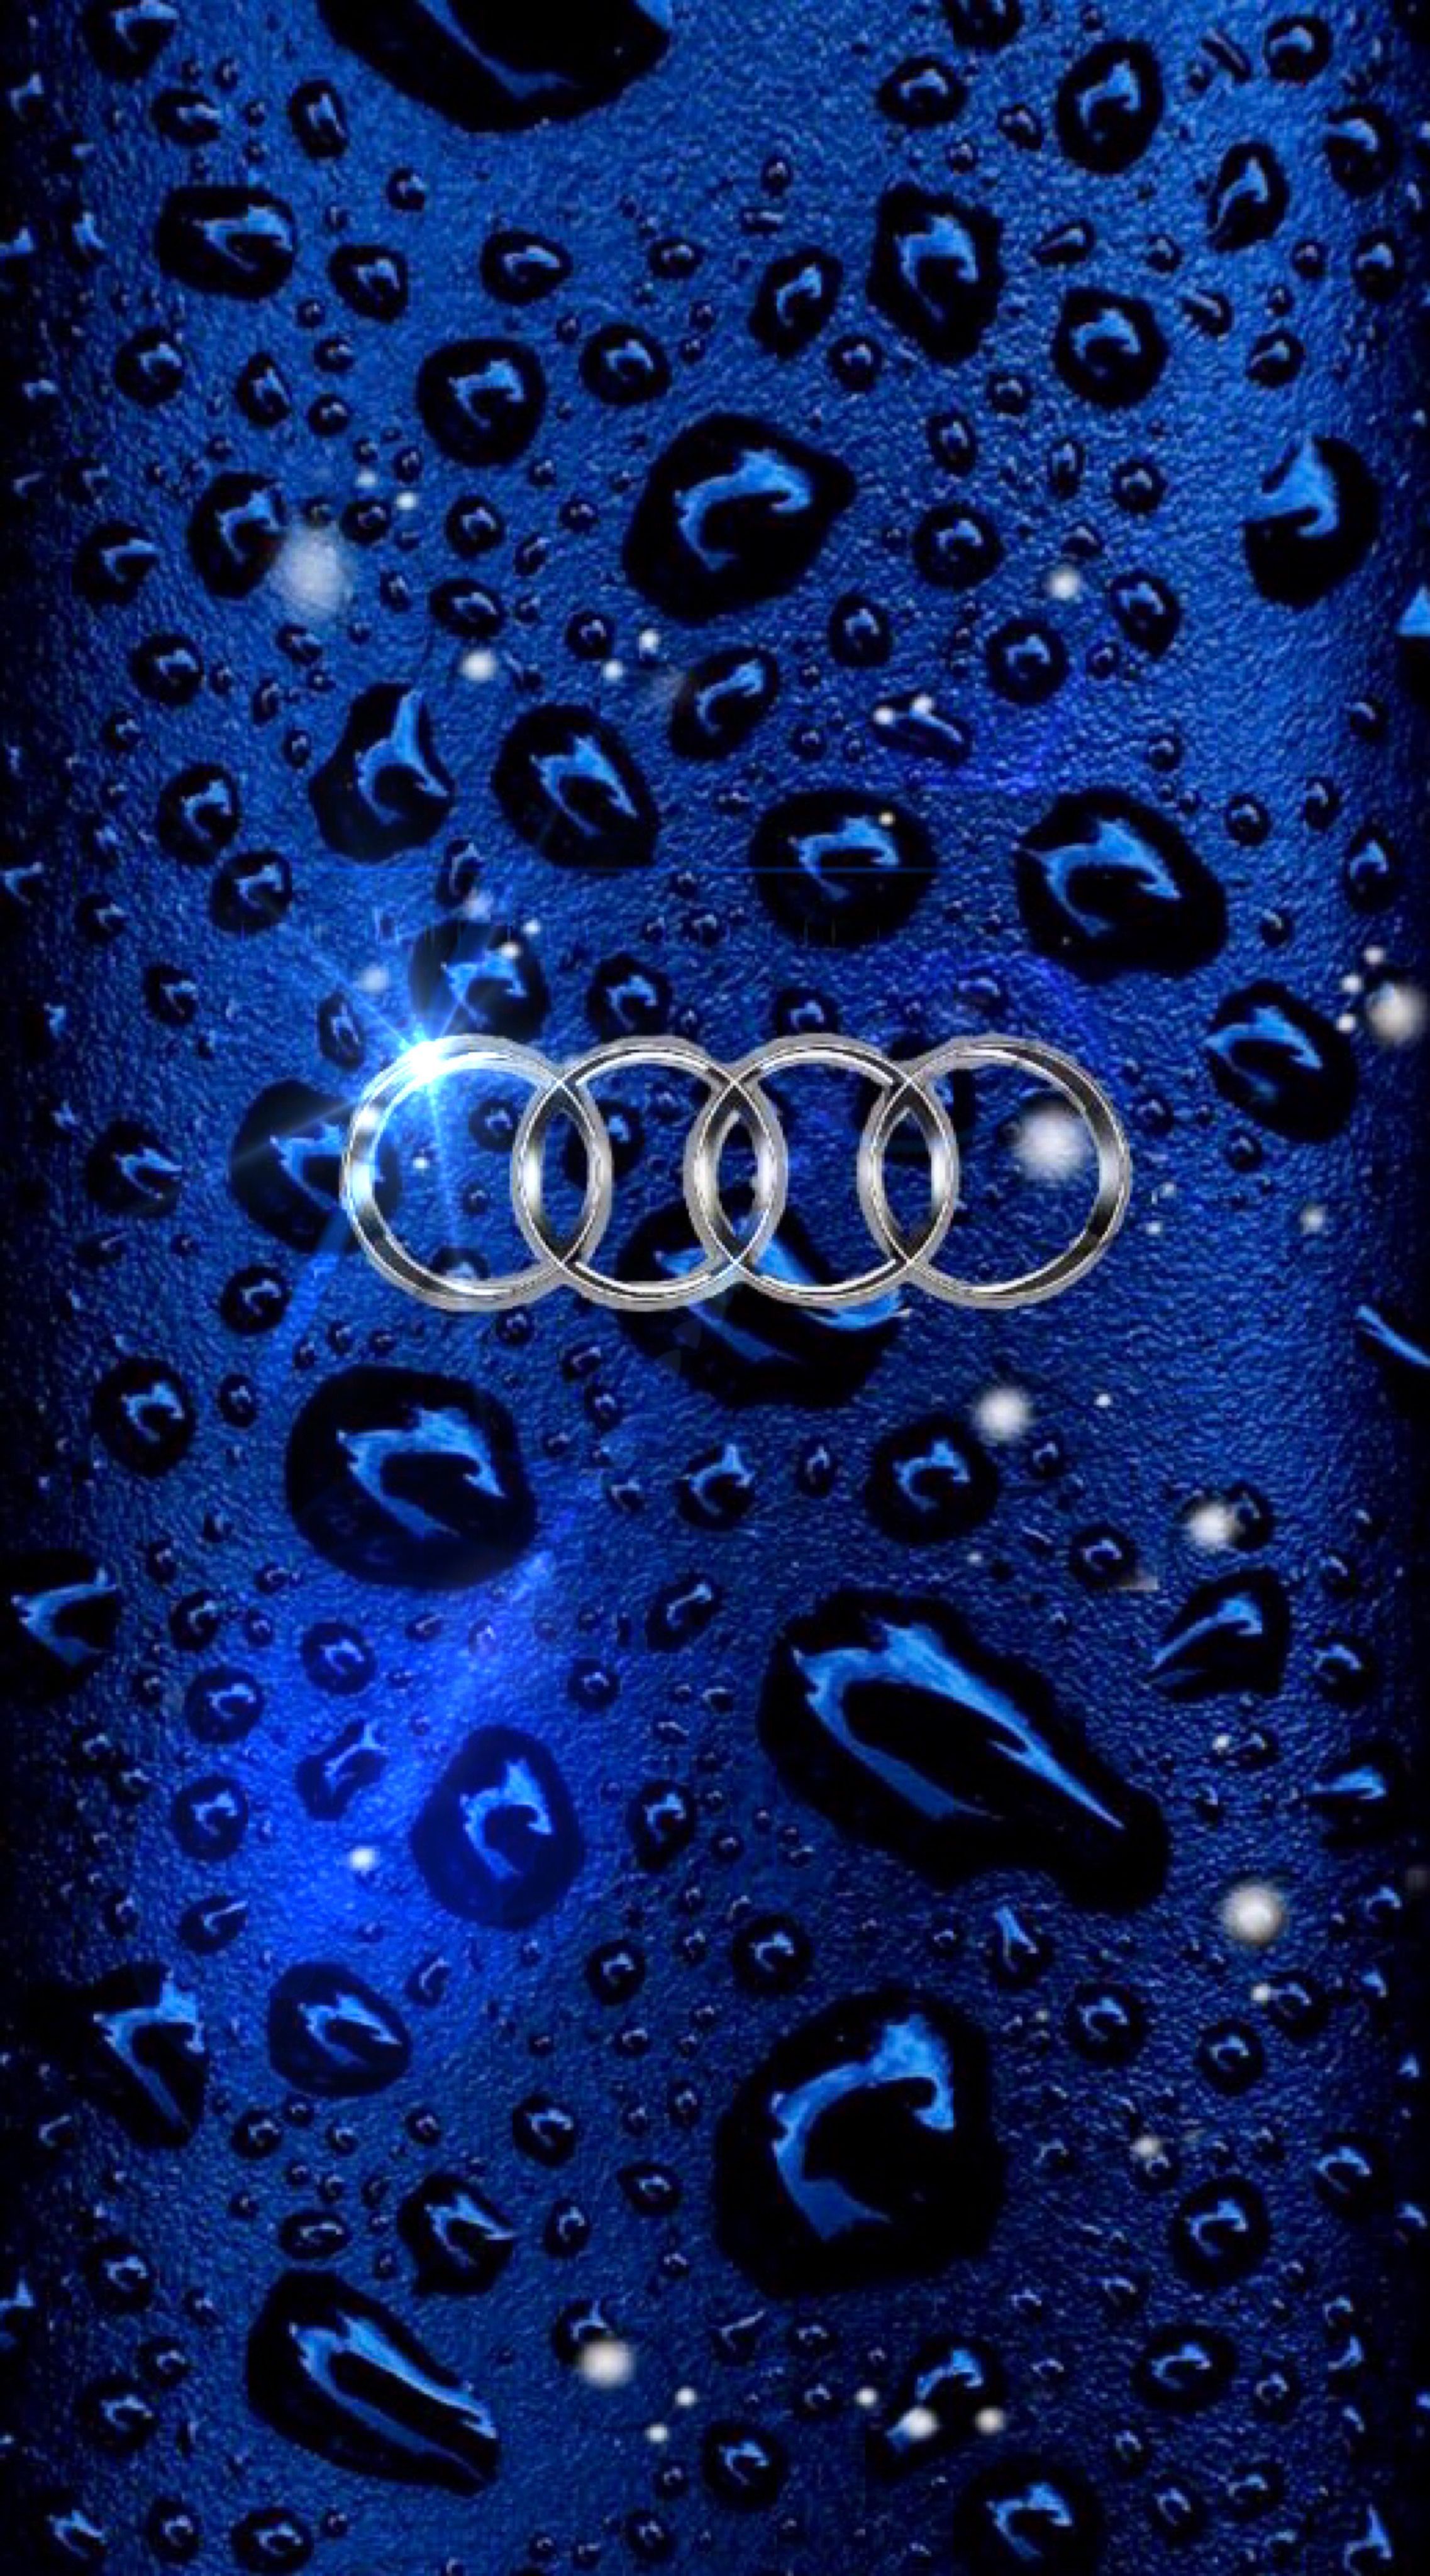 Audi Wallpaper iPhone Background. Audi Wallpaper iPhone. Logo wallpaper hd, iPhone wallpaper, iPhone background